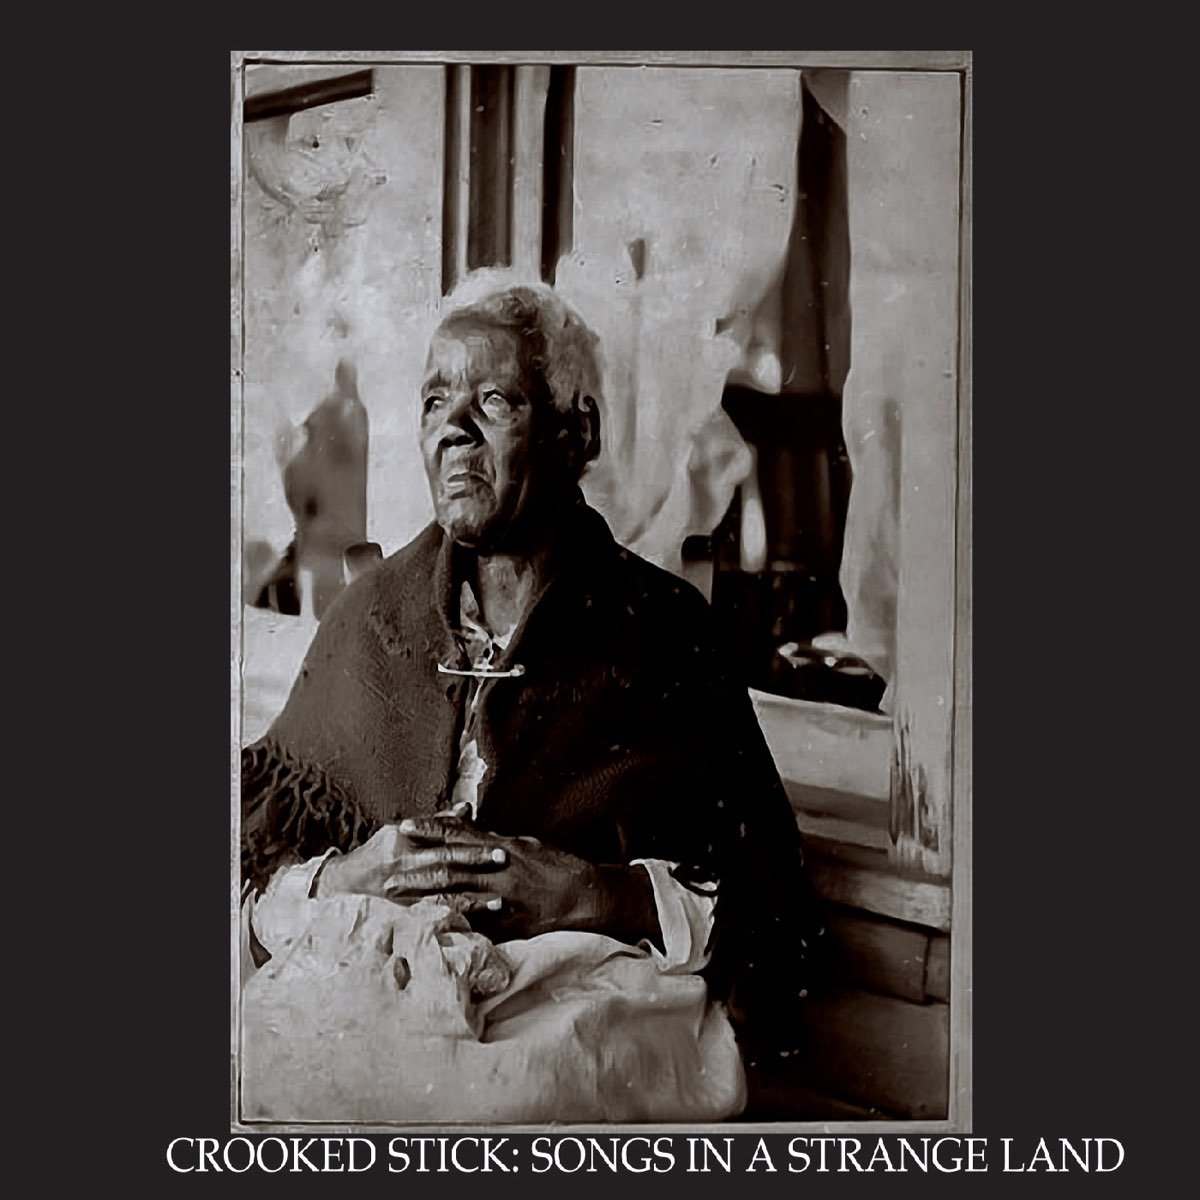 Crooked Stick: Songs in a Strange Land (Marietta Simpson, 2019)